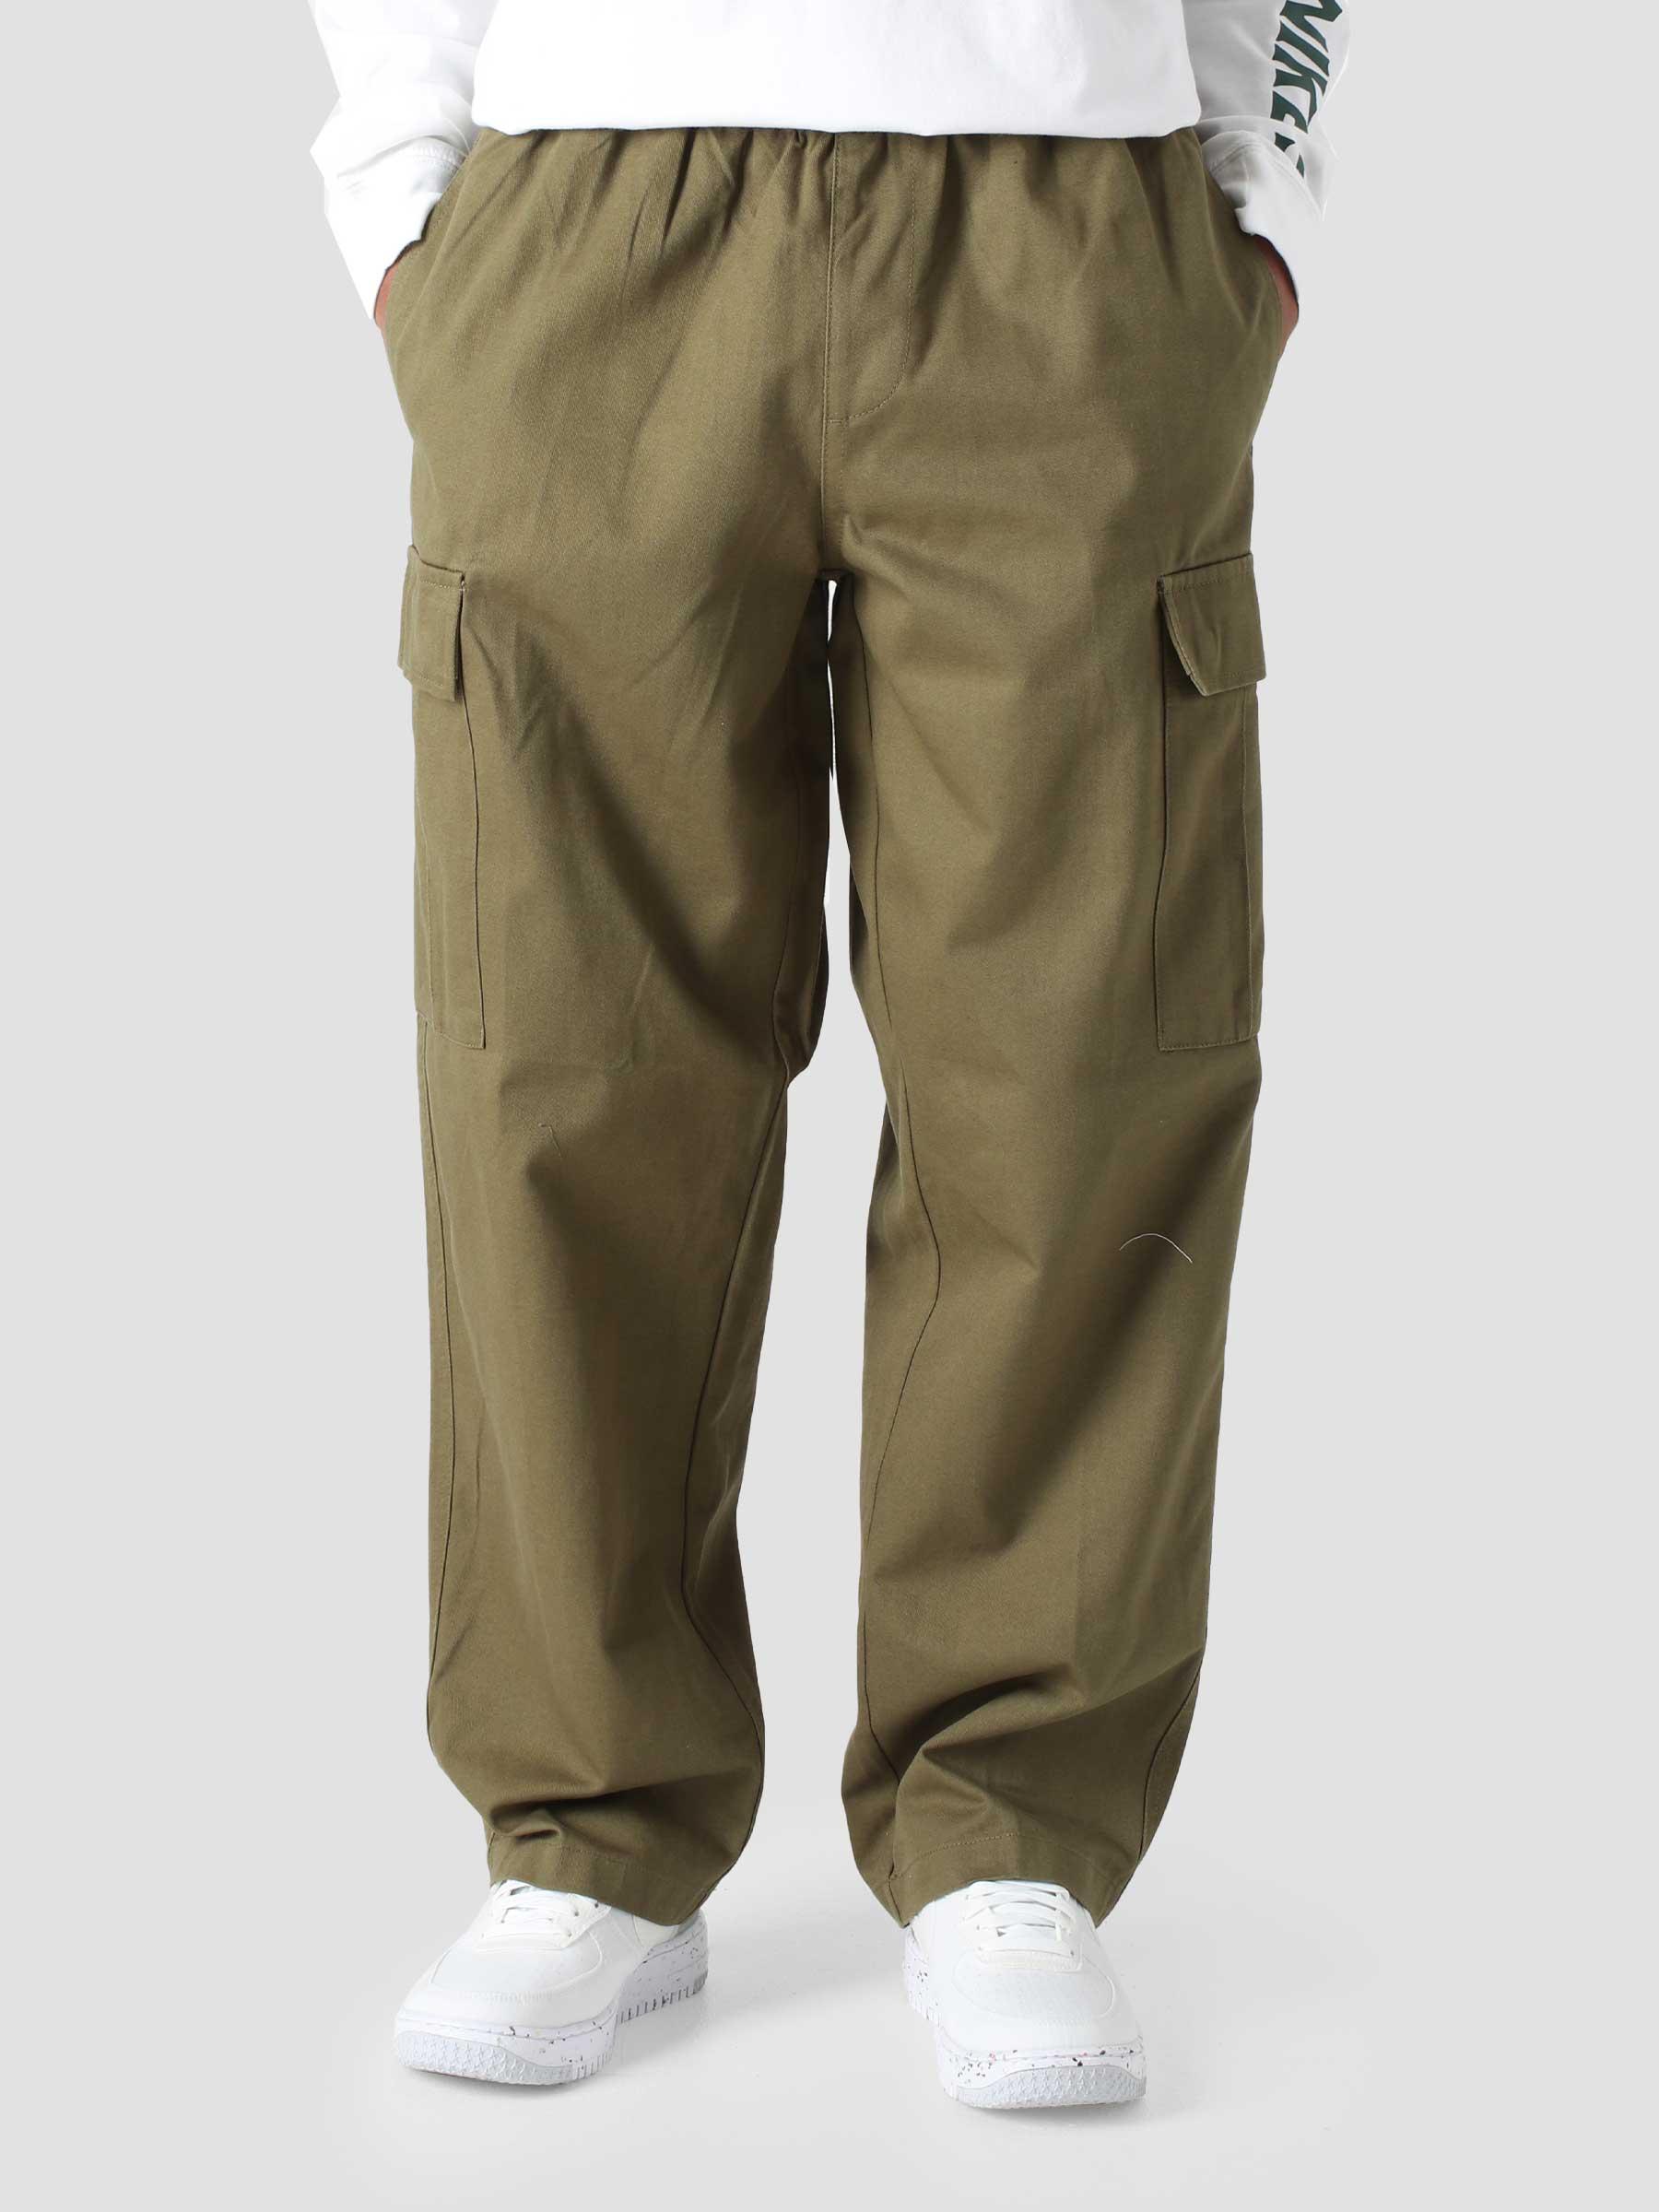 Easy Cargo Pant Pants Army Tent - Freshcotton